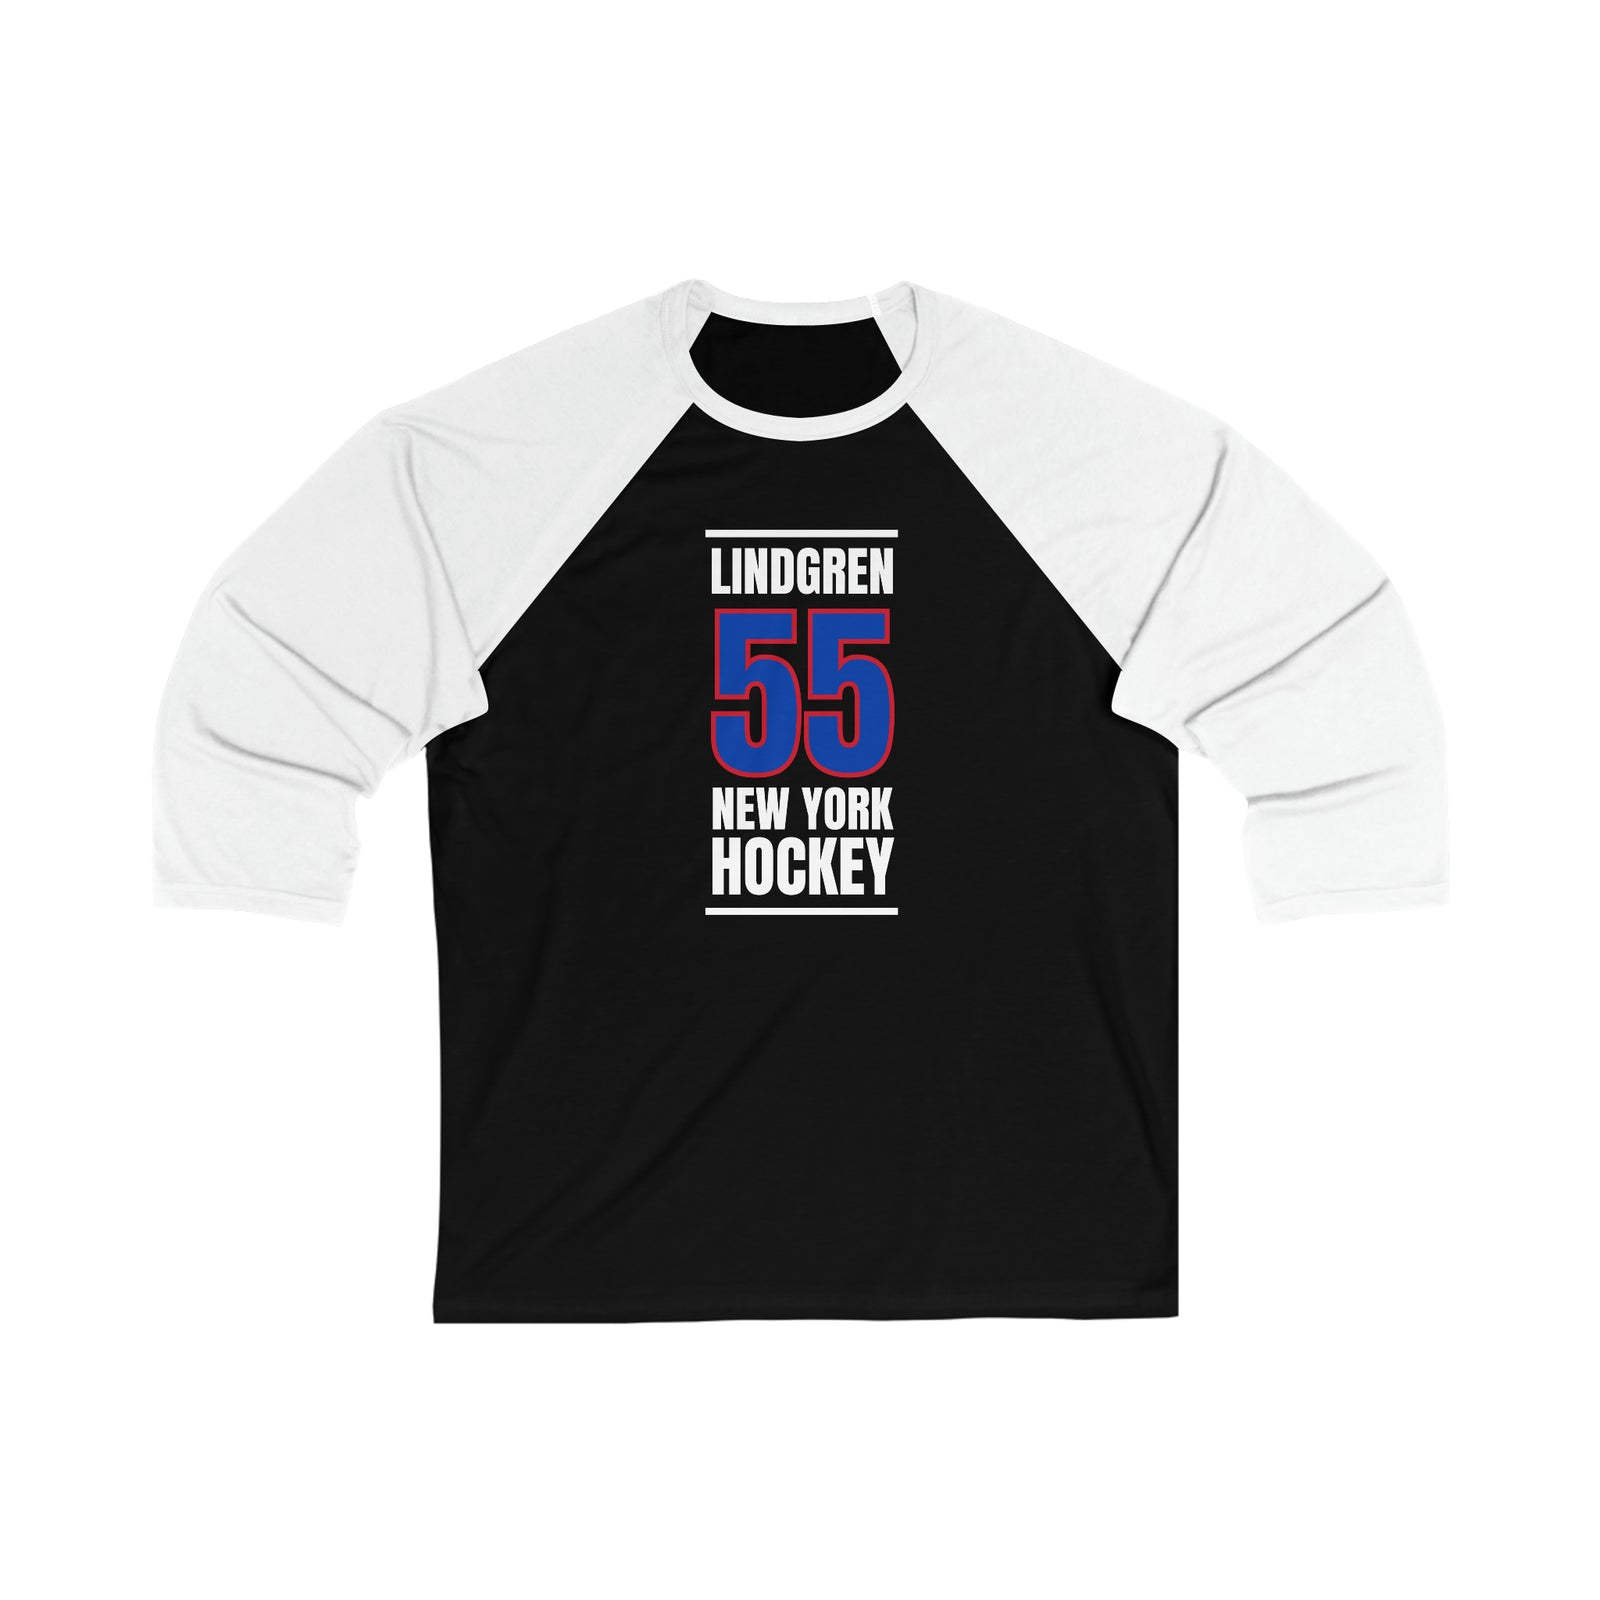 Chris Kreider Baseball Tee Shirt, New York Hockey Men's Baseball T-Shirt